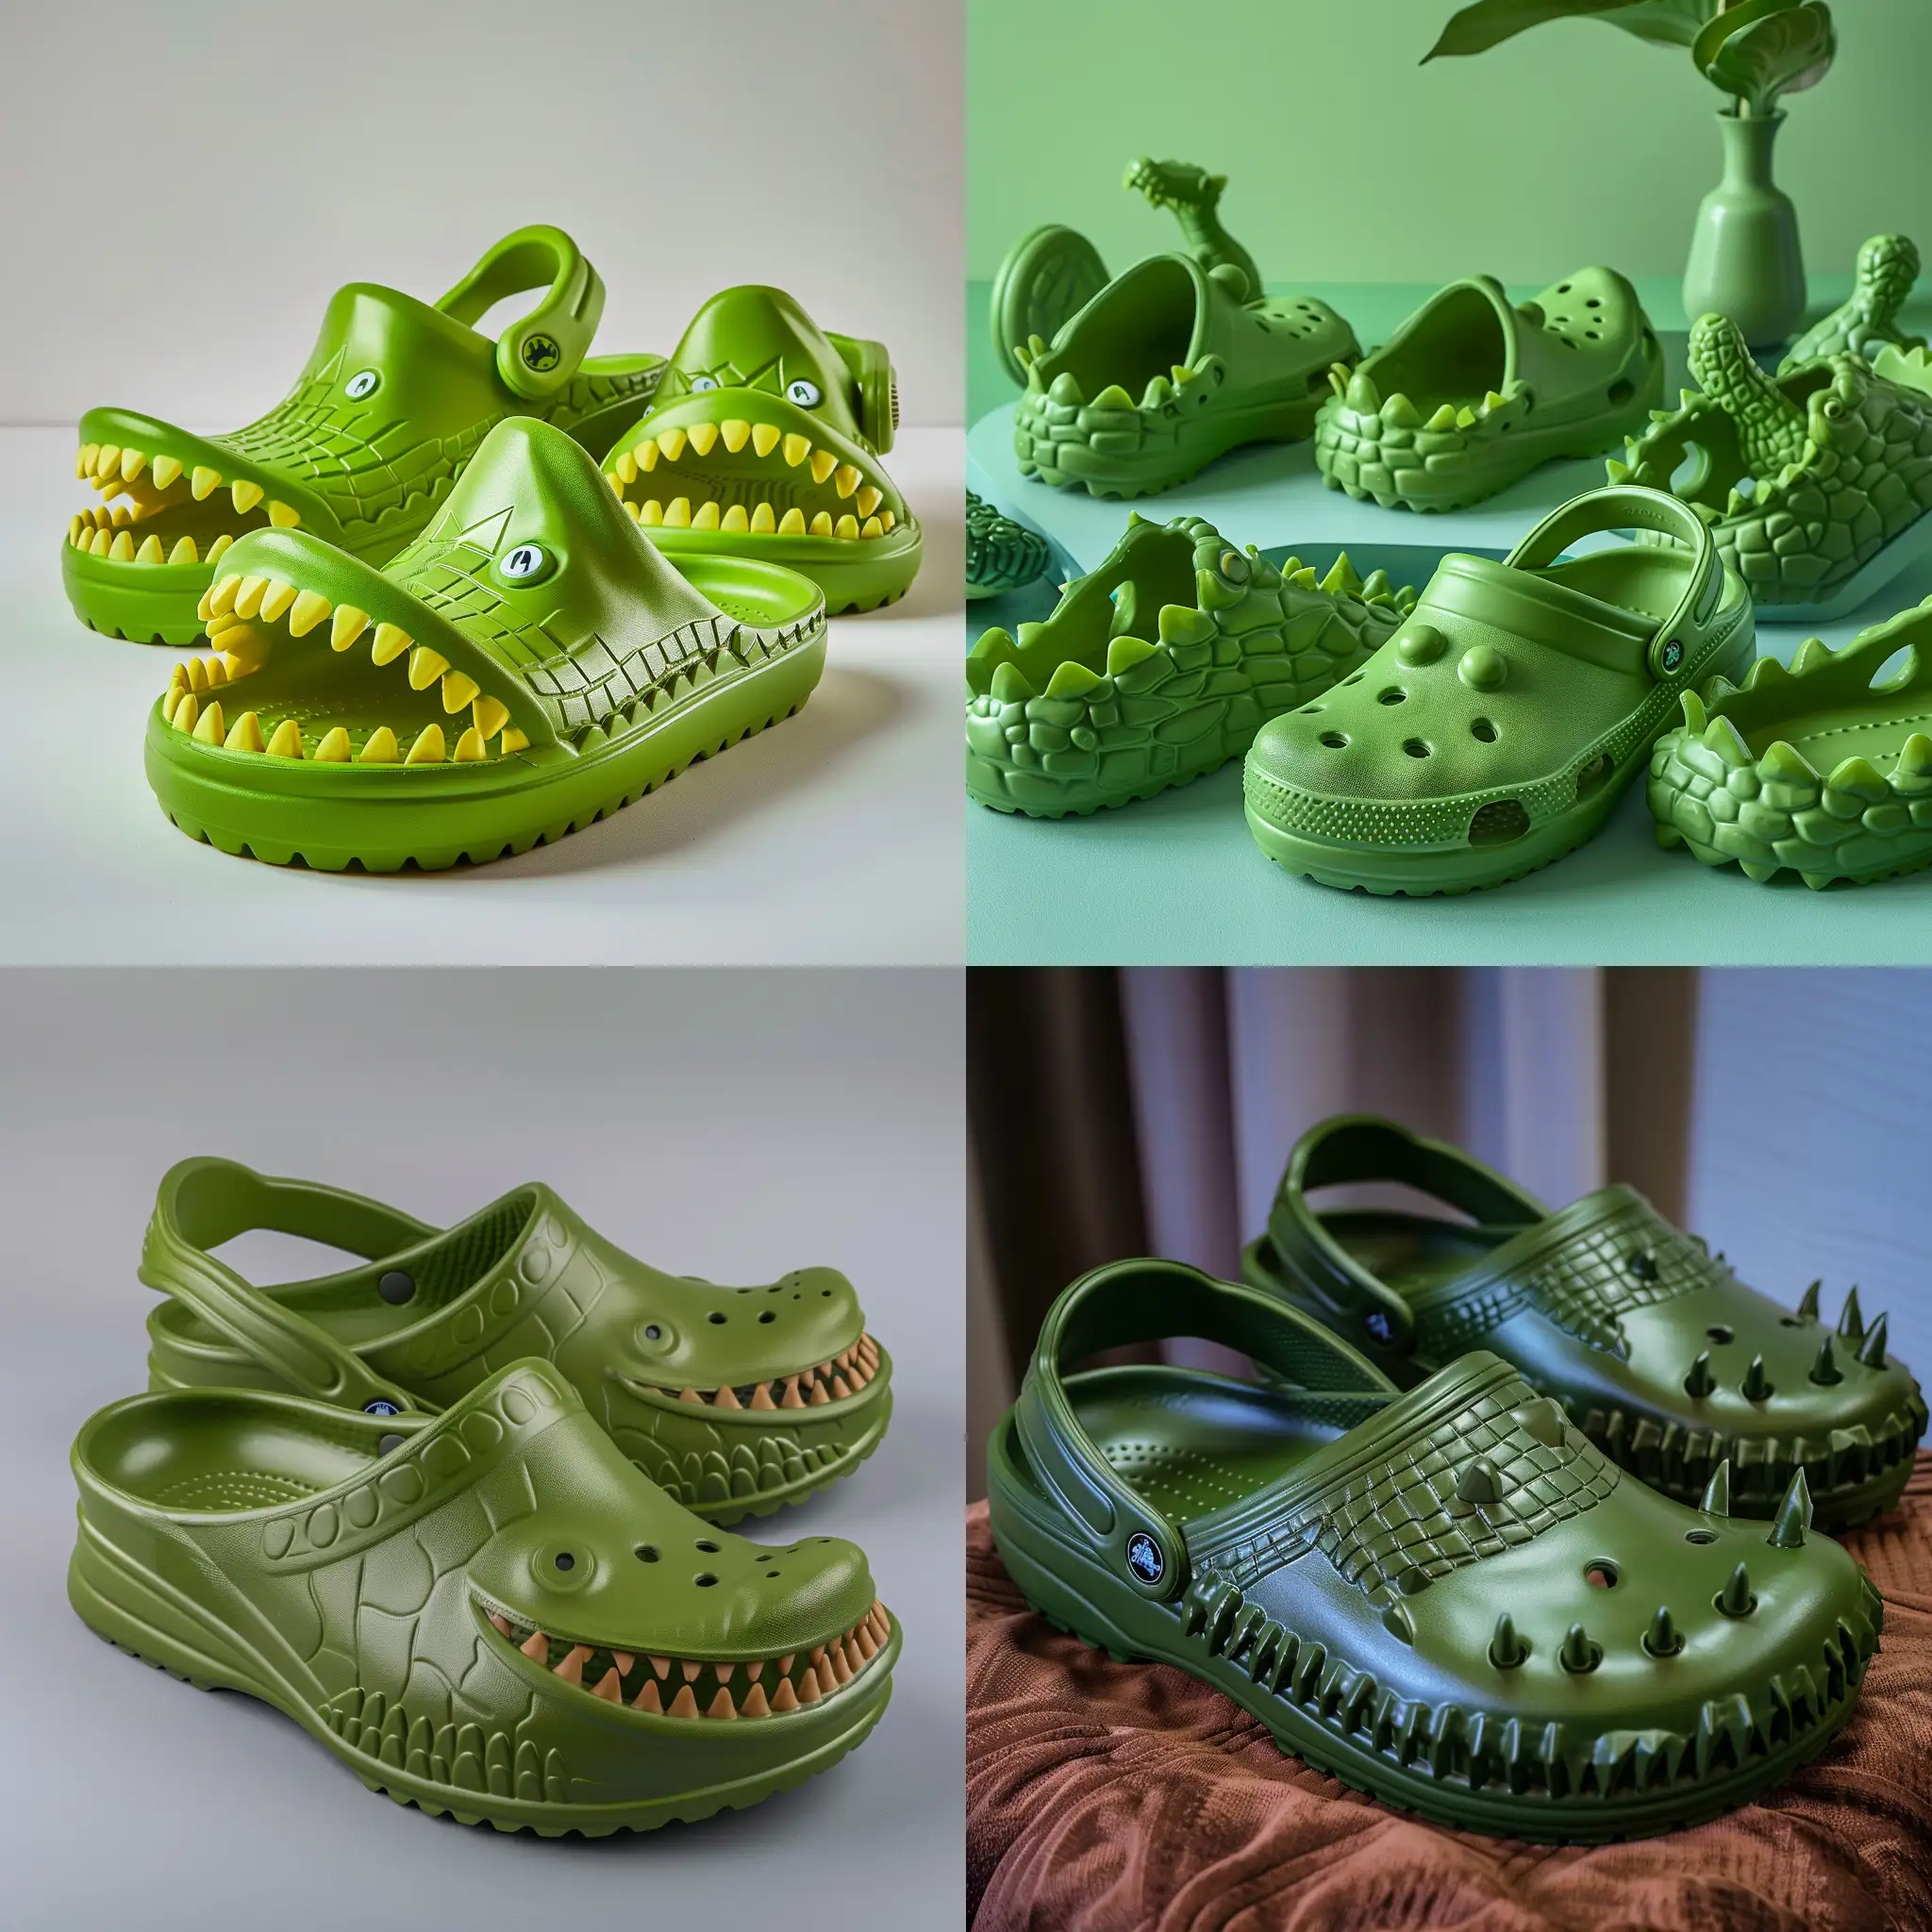 product photography, studio lit, plastic clogs that resemble cartoon crocodiles, medium green